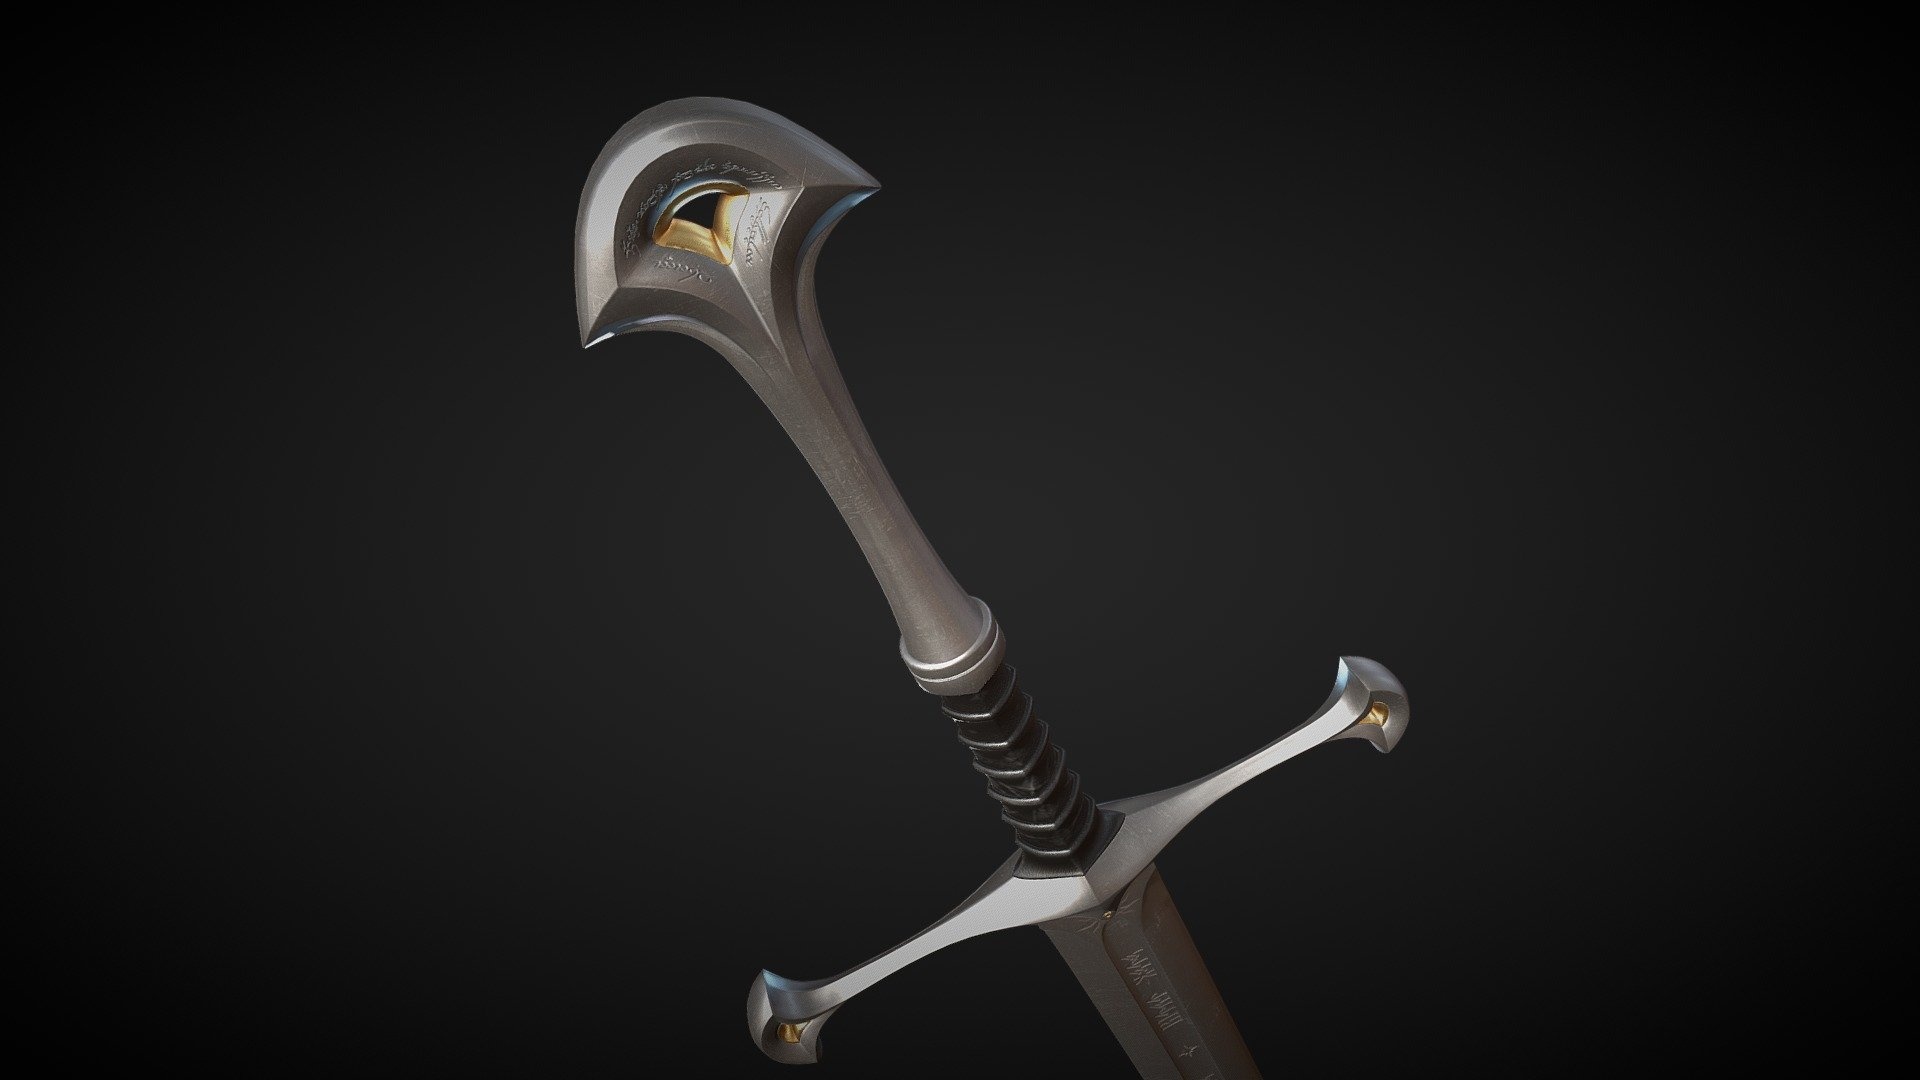 Narsil Sword, Aragorn's weapon, Mythical blade, Heroic symbolism, 1920x1080 Full HD Desktop